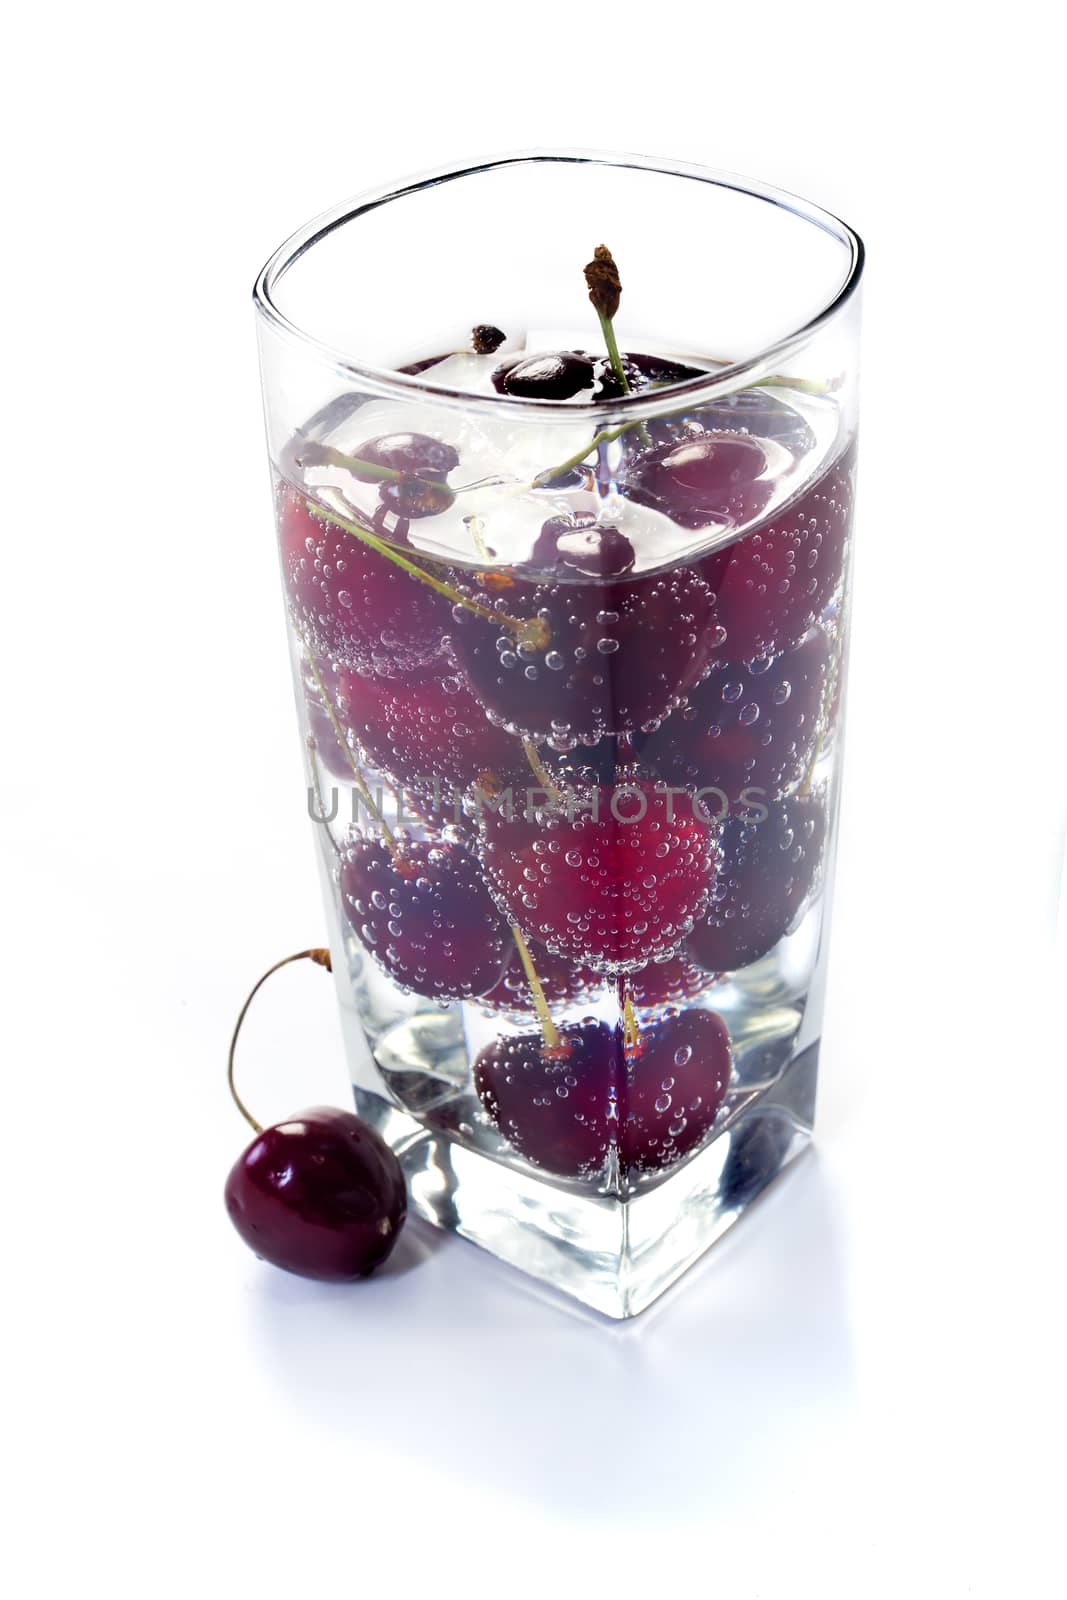 Sweet cherry in glass with water by yurii_bizgaimer